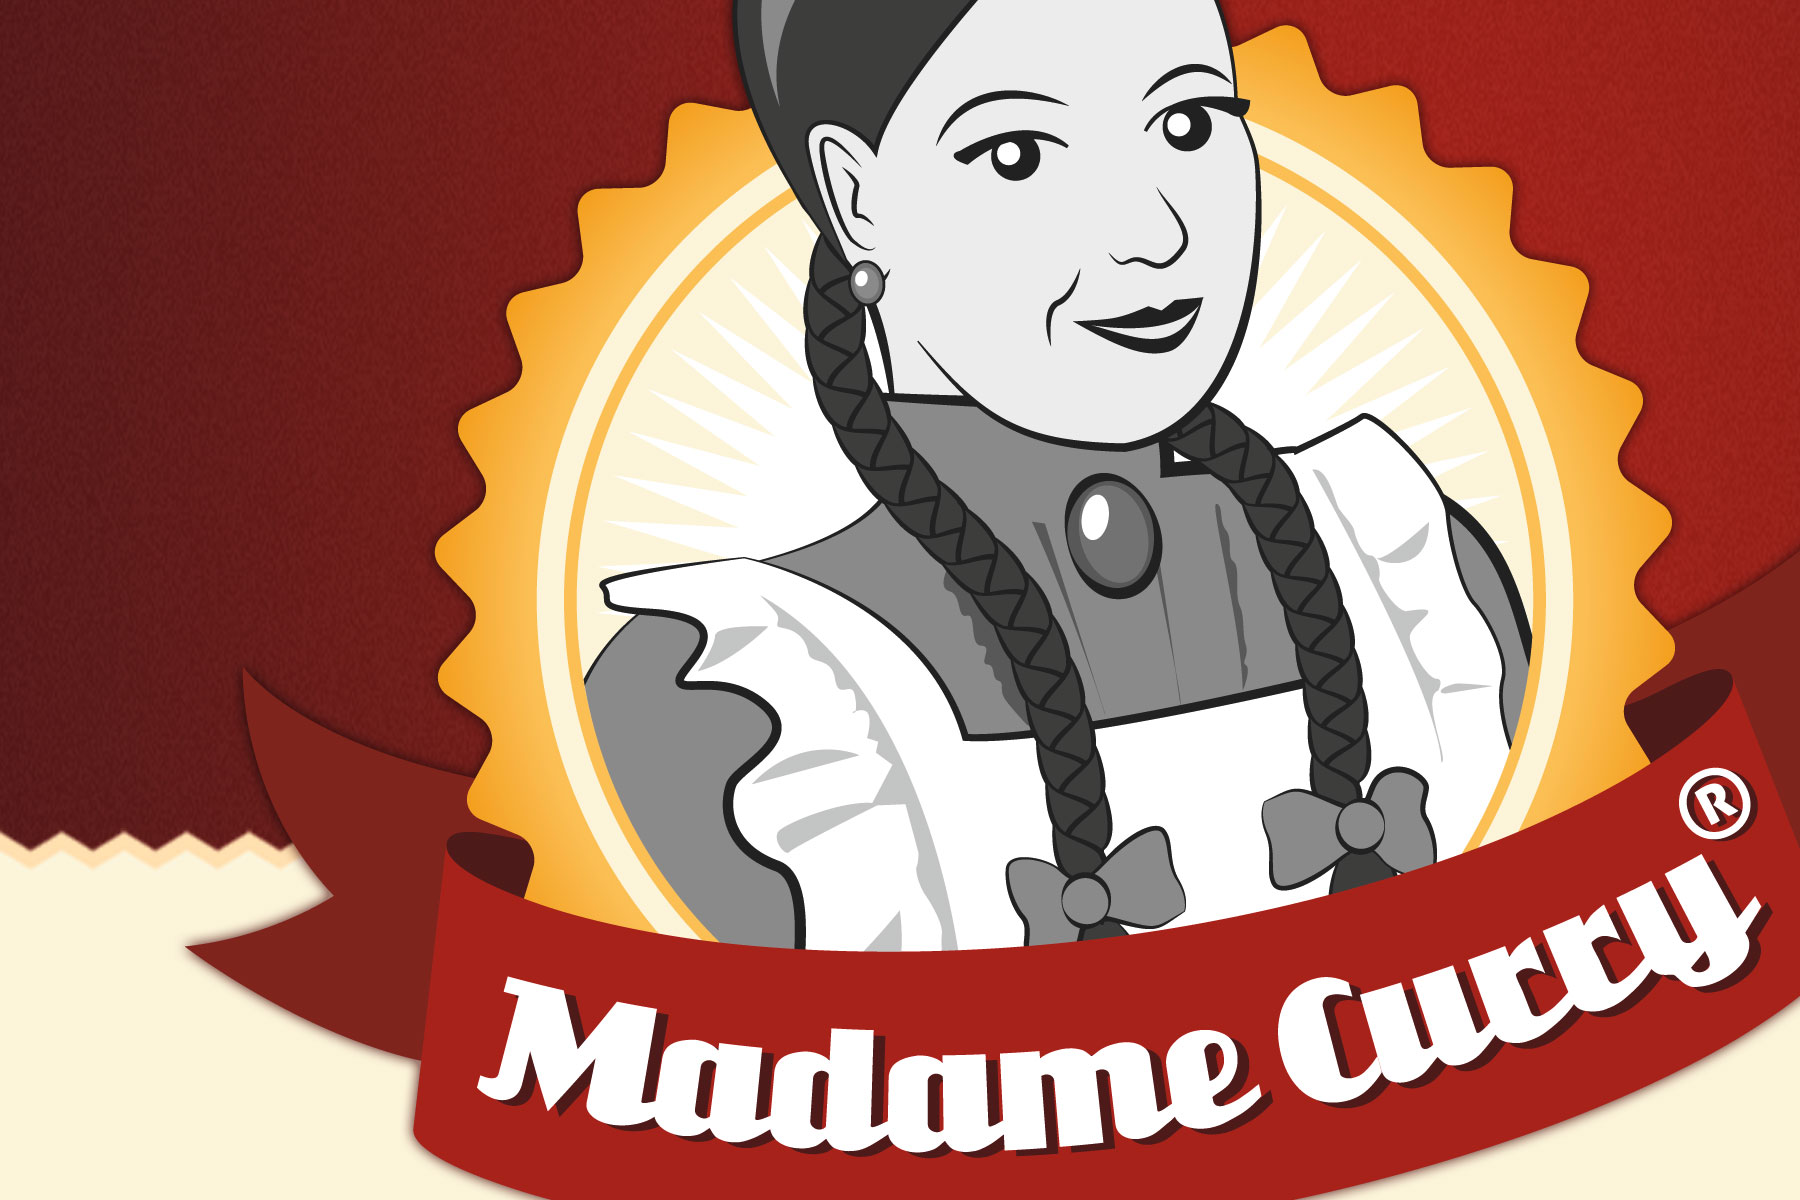 (c) Madame-curry.info